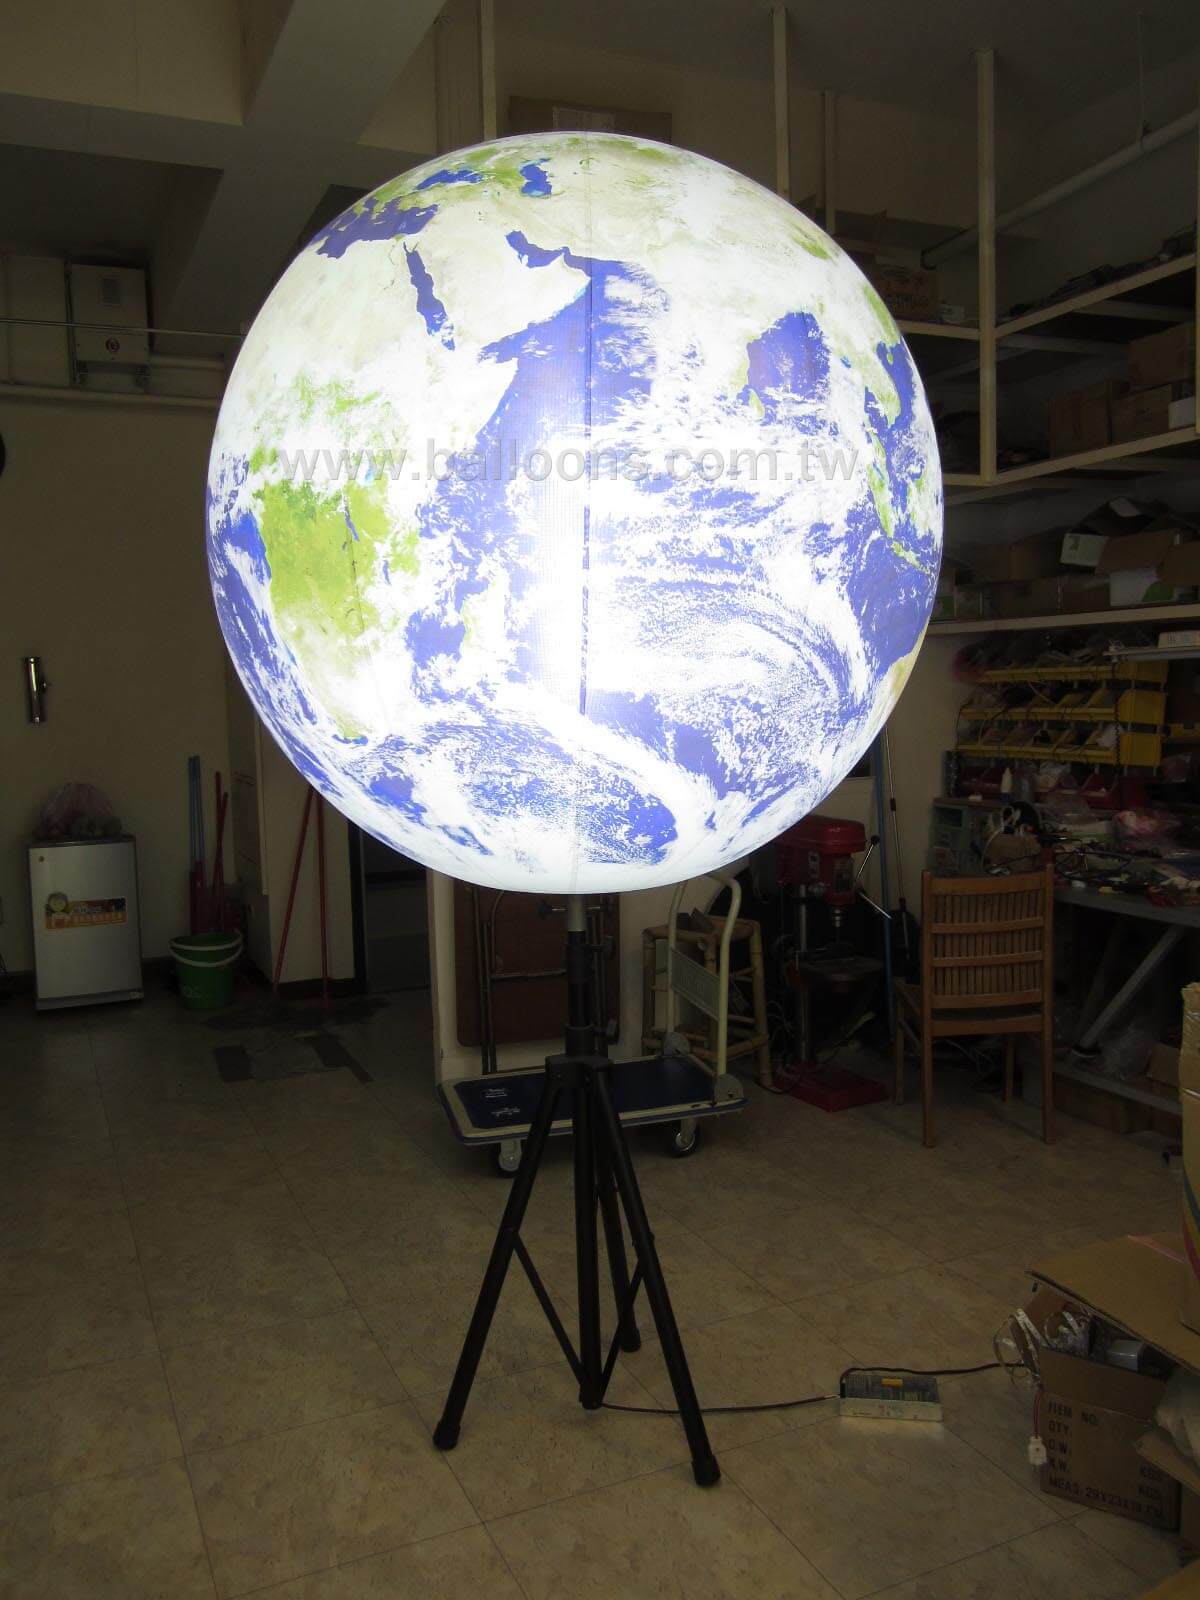 LED lighted stand and globe balloon站立式LED三腳燈架搭配地球圖案氣球